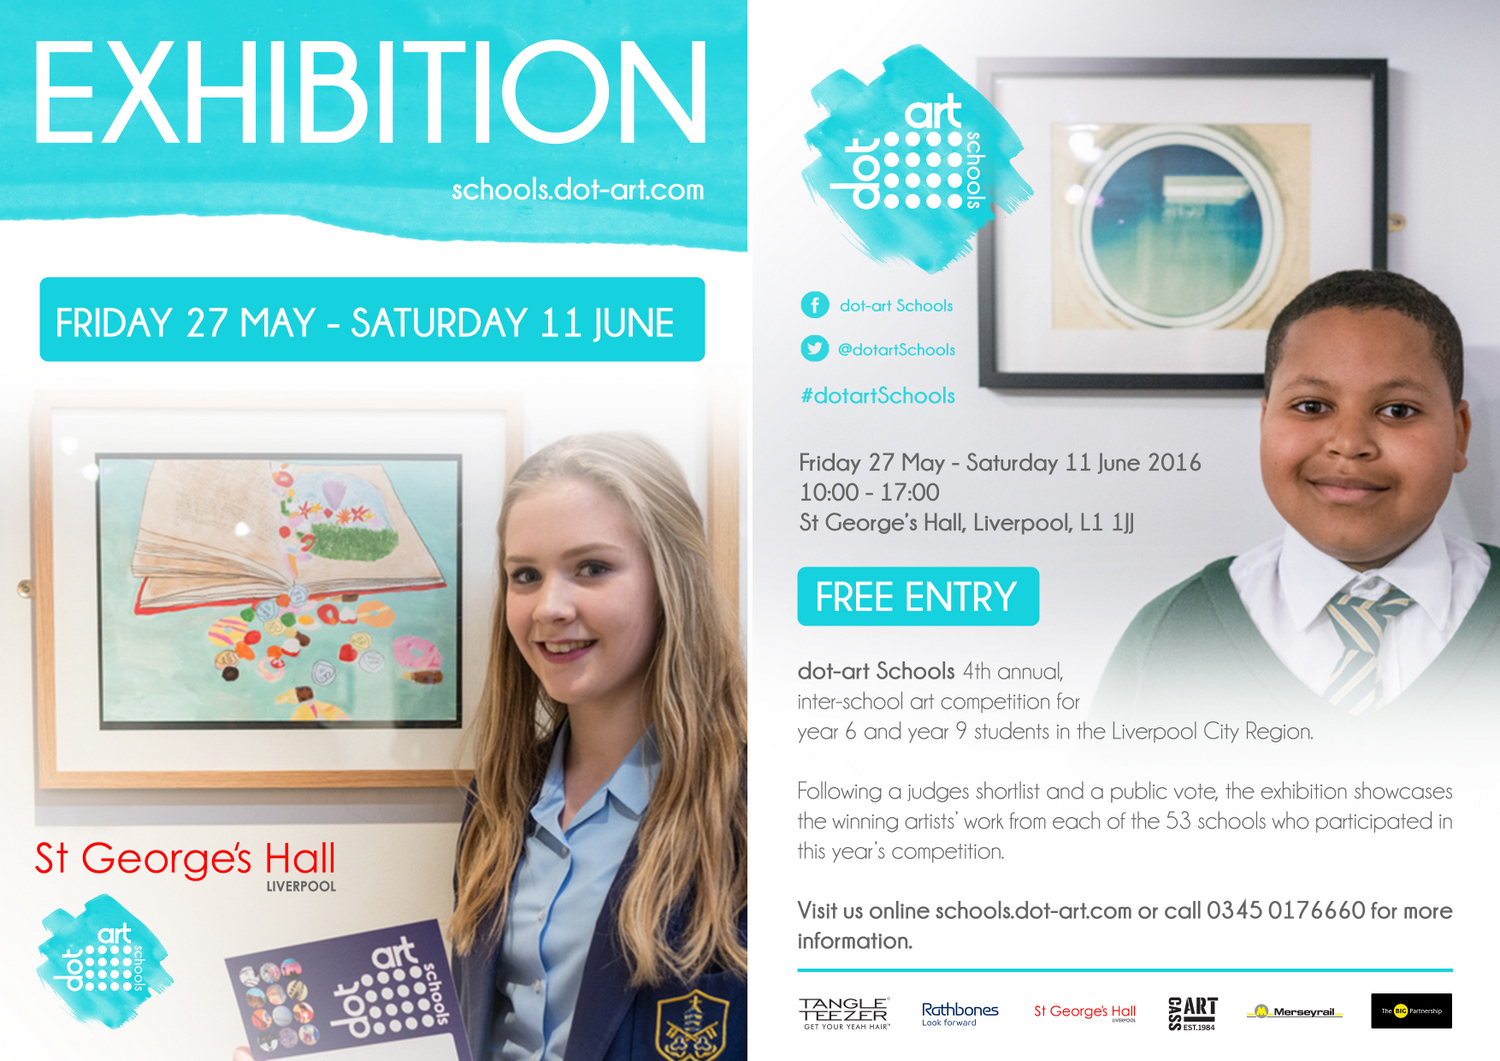 dot-art Schools Exhibition Flyer 2016